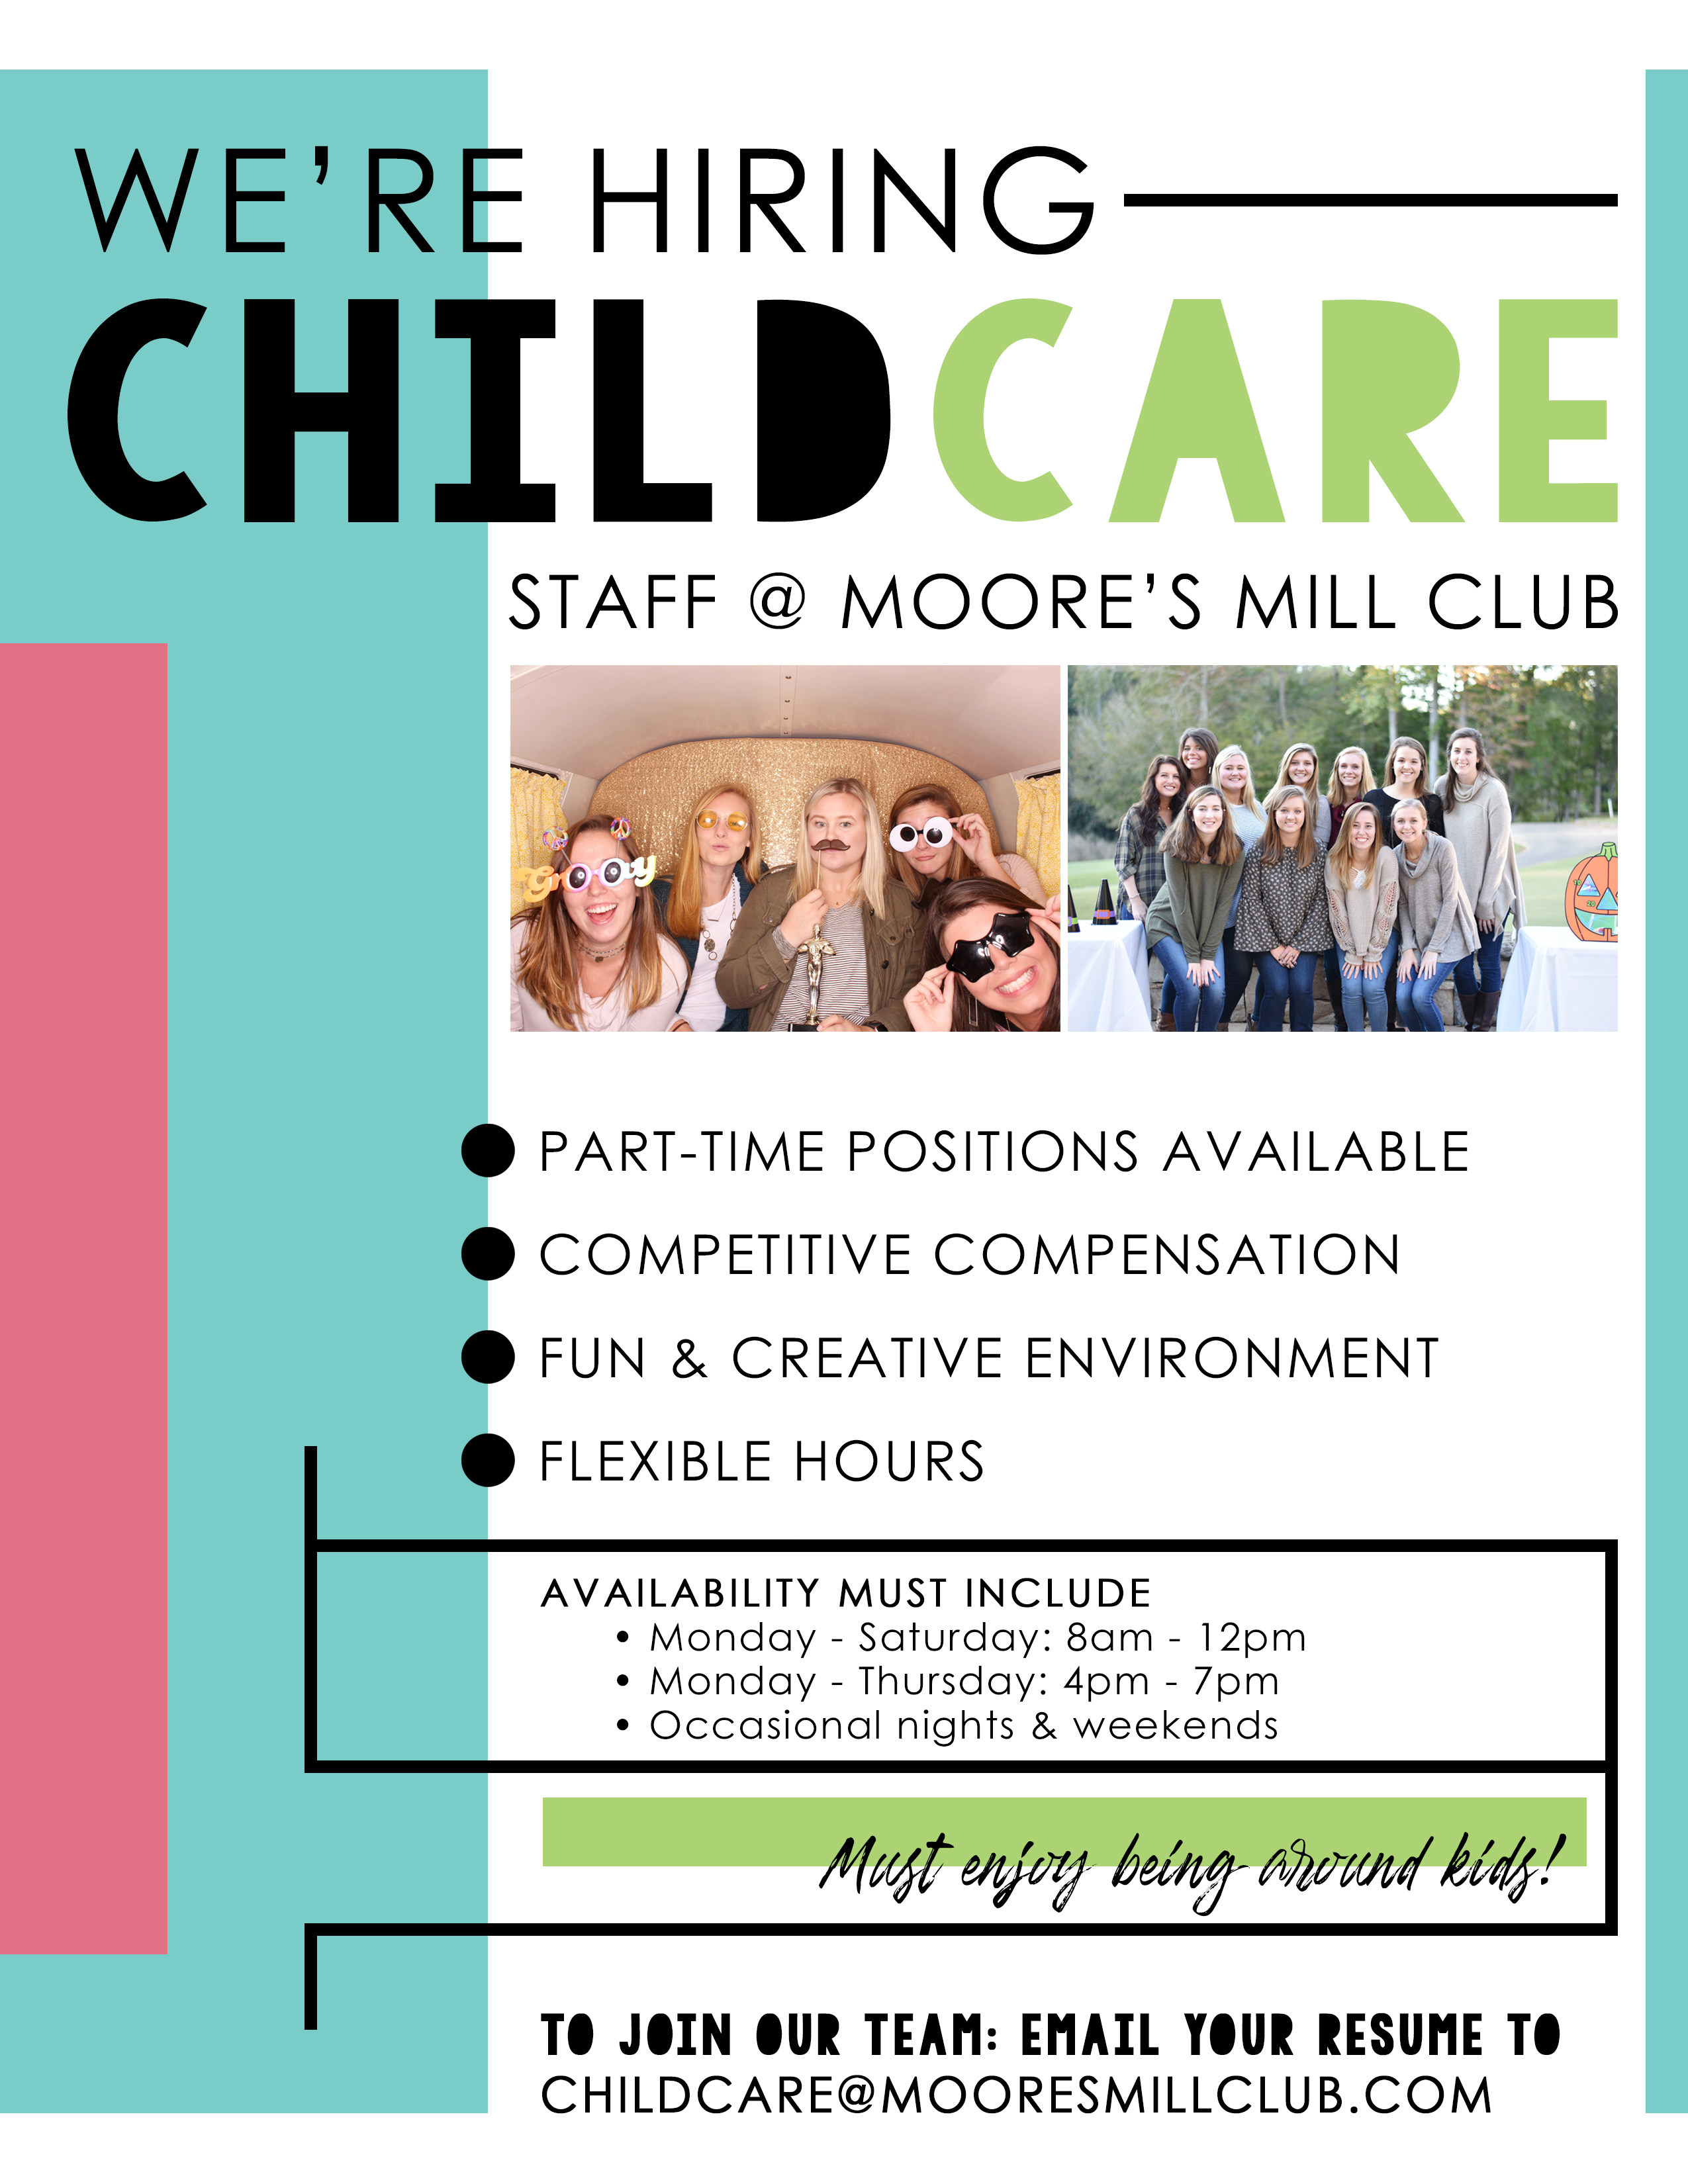 Childcare jobs hiring in louisville ky